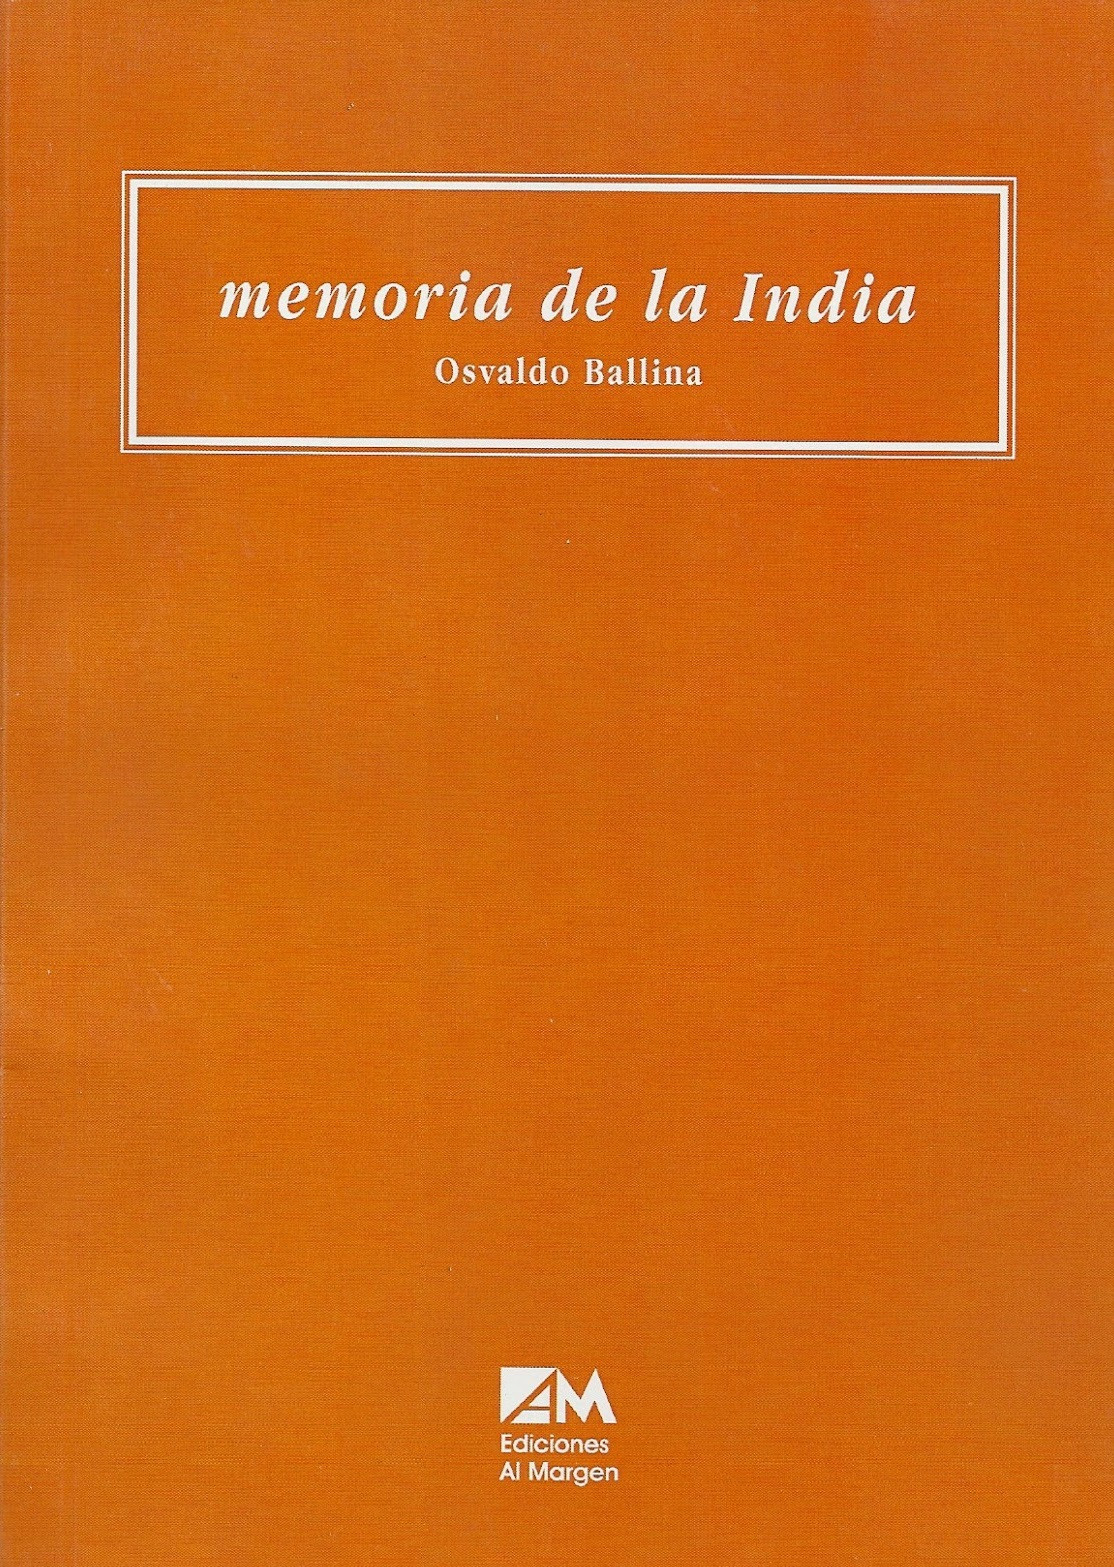 Libro Ballina 4   Memoria de la India